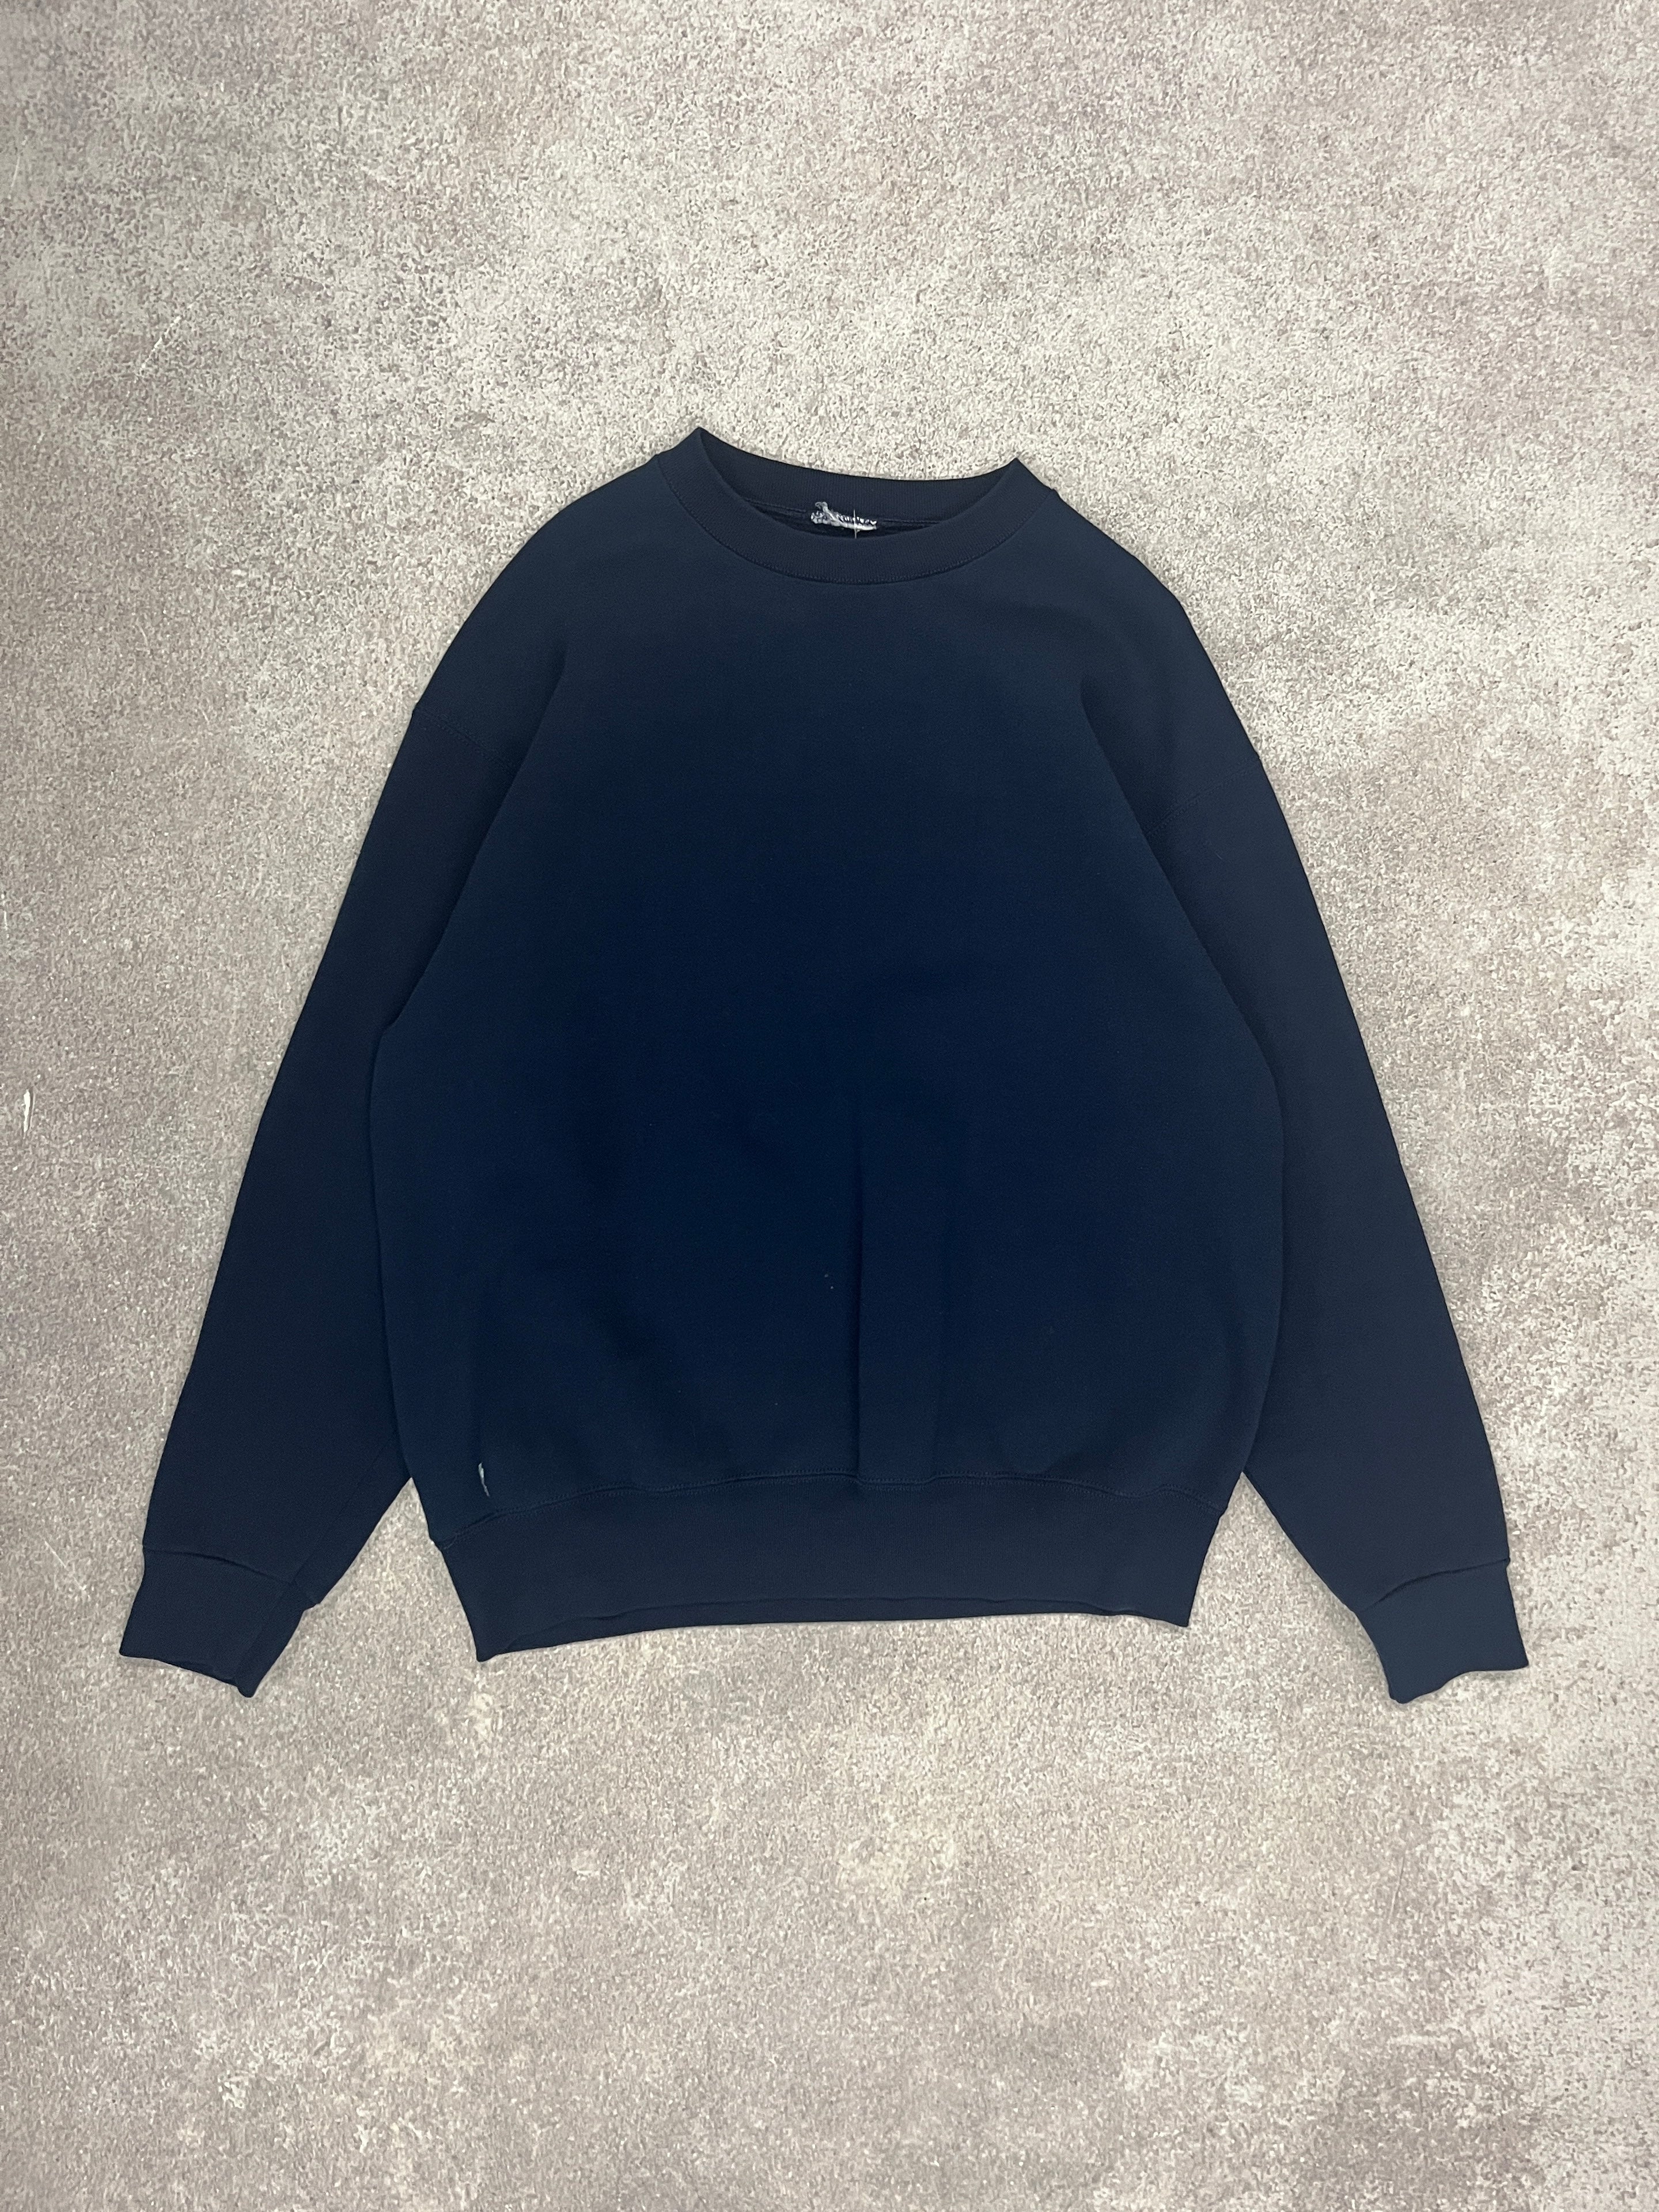 Vintage Blank Sweater Blue // X-Large - RHAGHOUSE VINTAGE